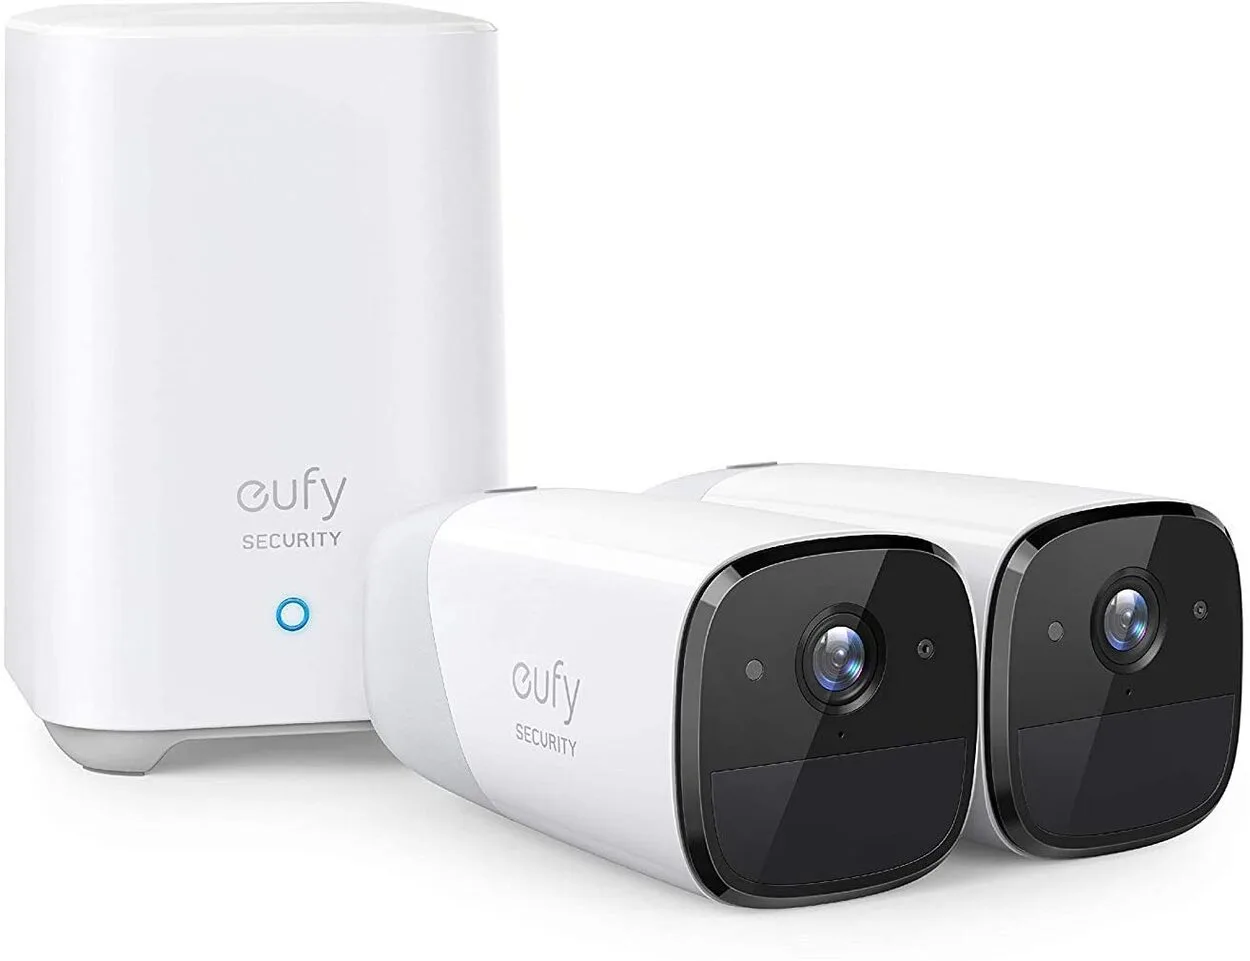 EufyCam smart security camera